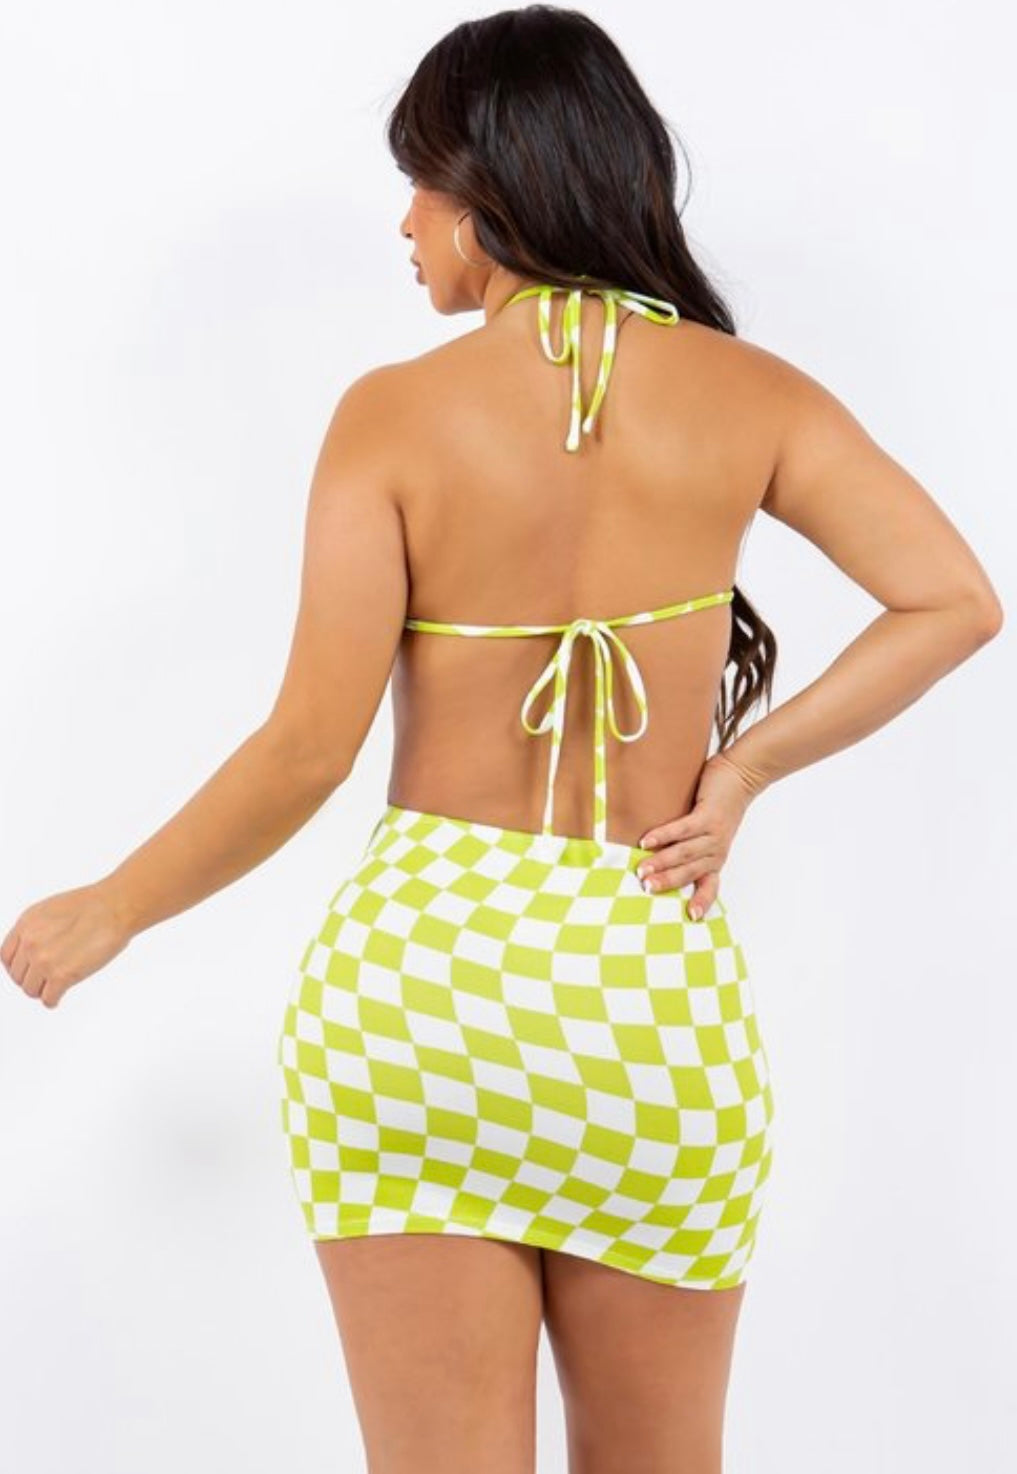 The “Neon Summer” Checkered Dress